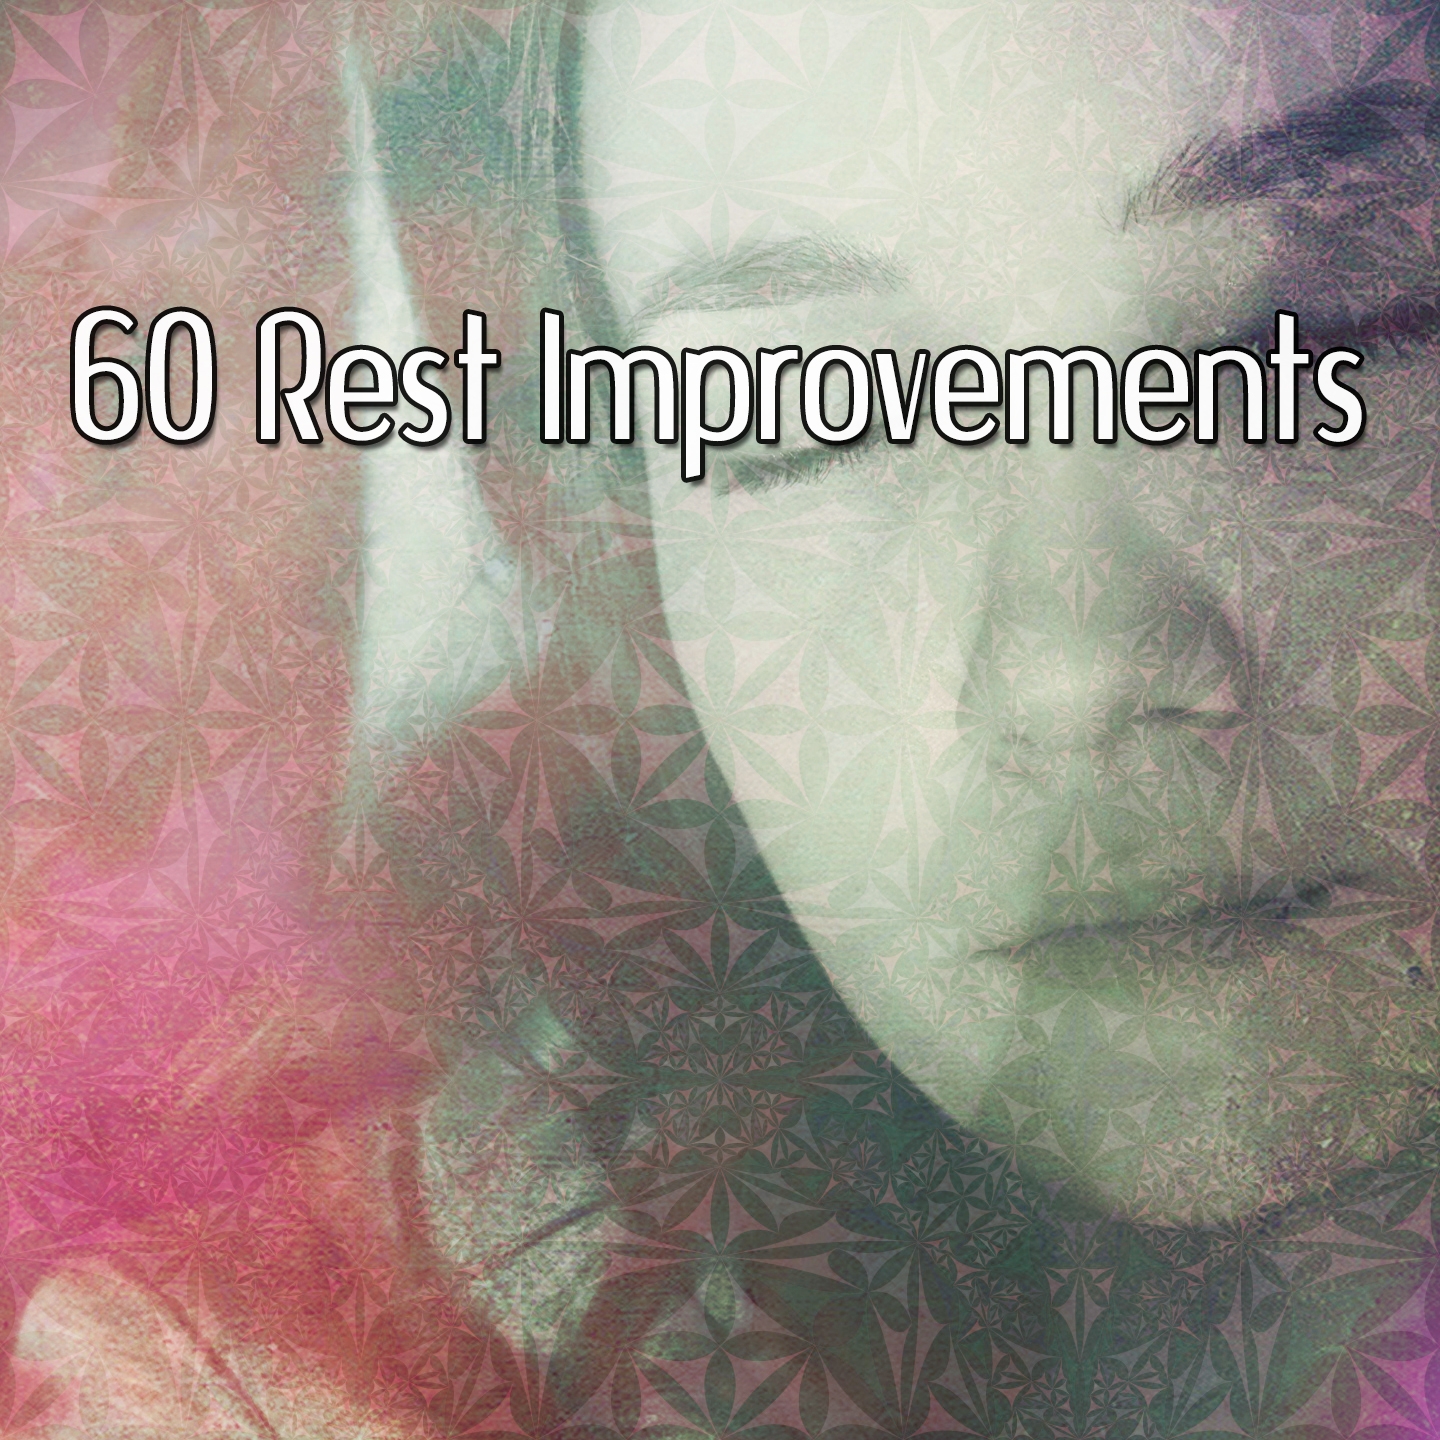 60 Rest Improvements